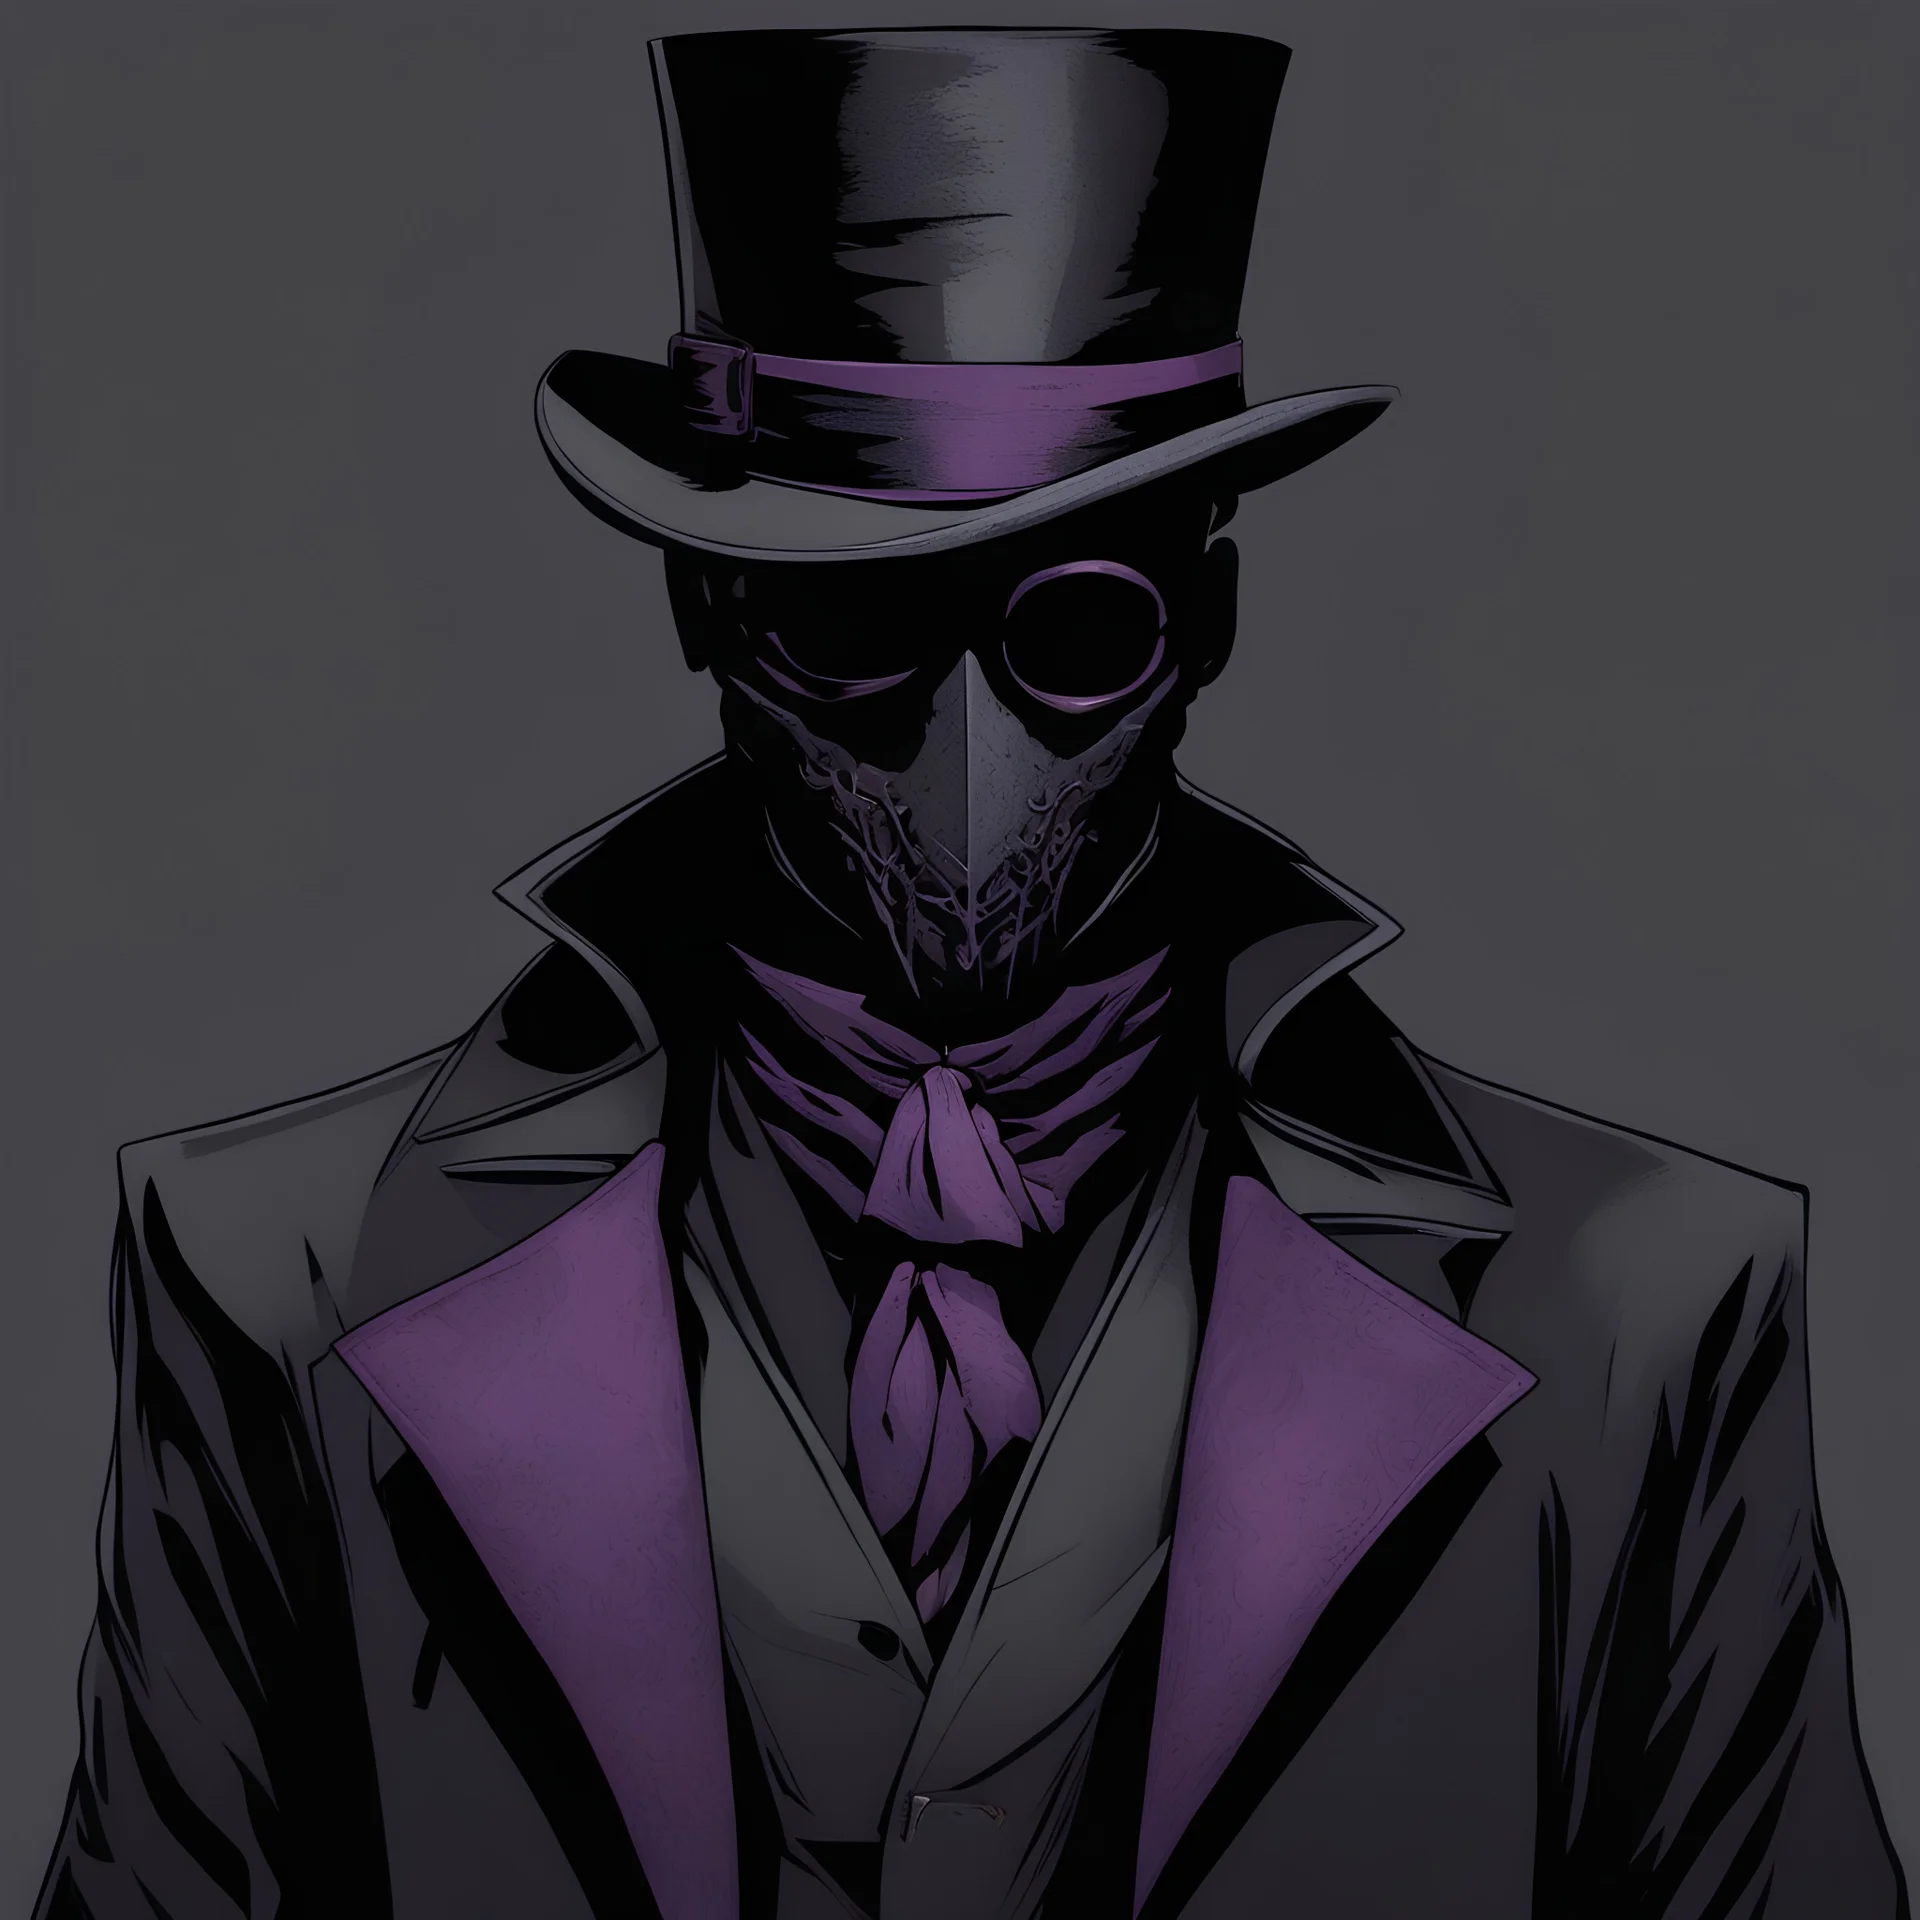 warlock, black top hat, black mask with ash purple patterns, black trench coat with ash purple patterns, dark, ominous, ash purple, grey background, profile picture, simplistic design